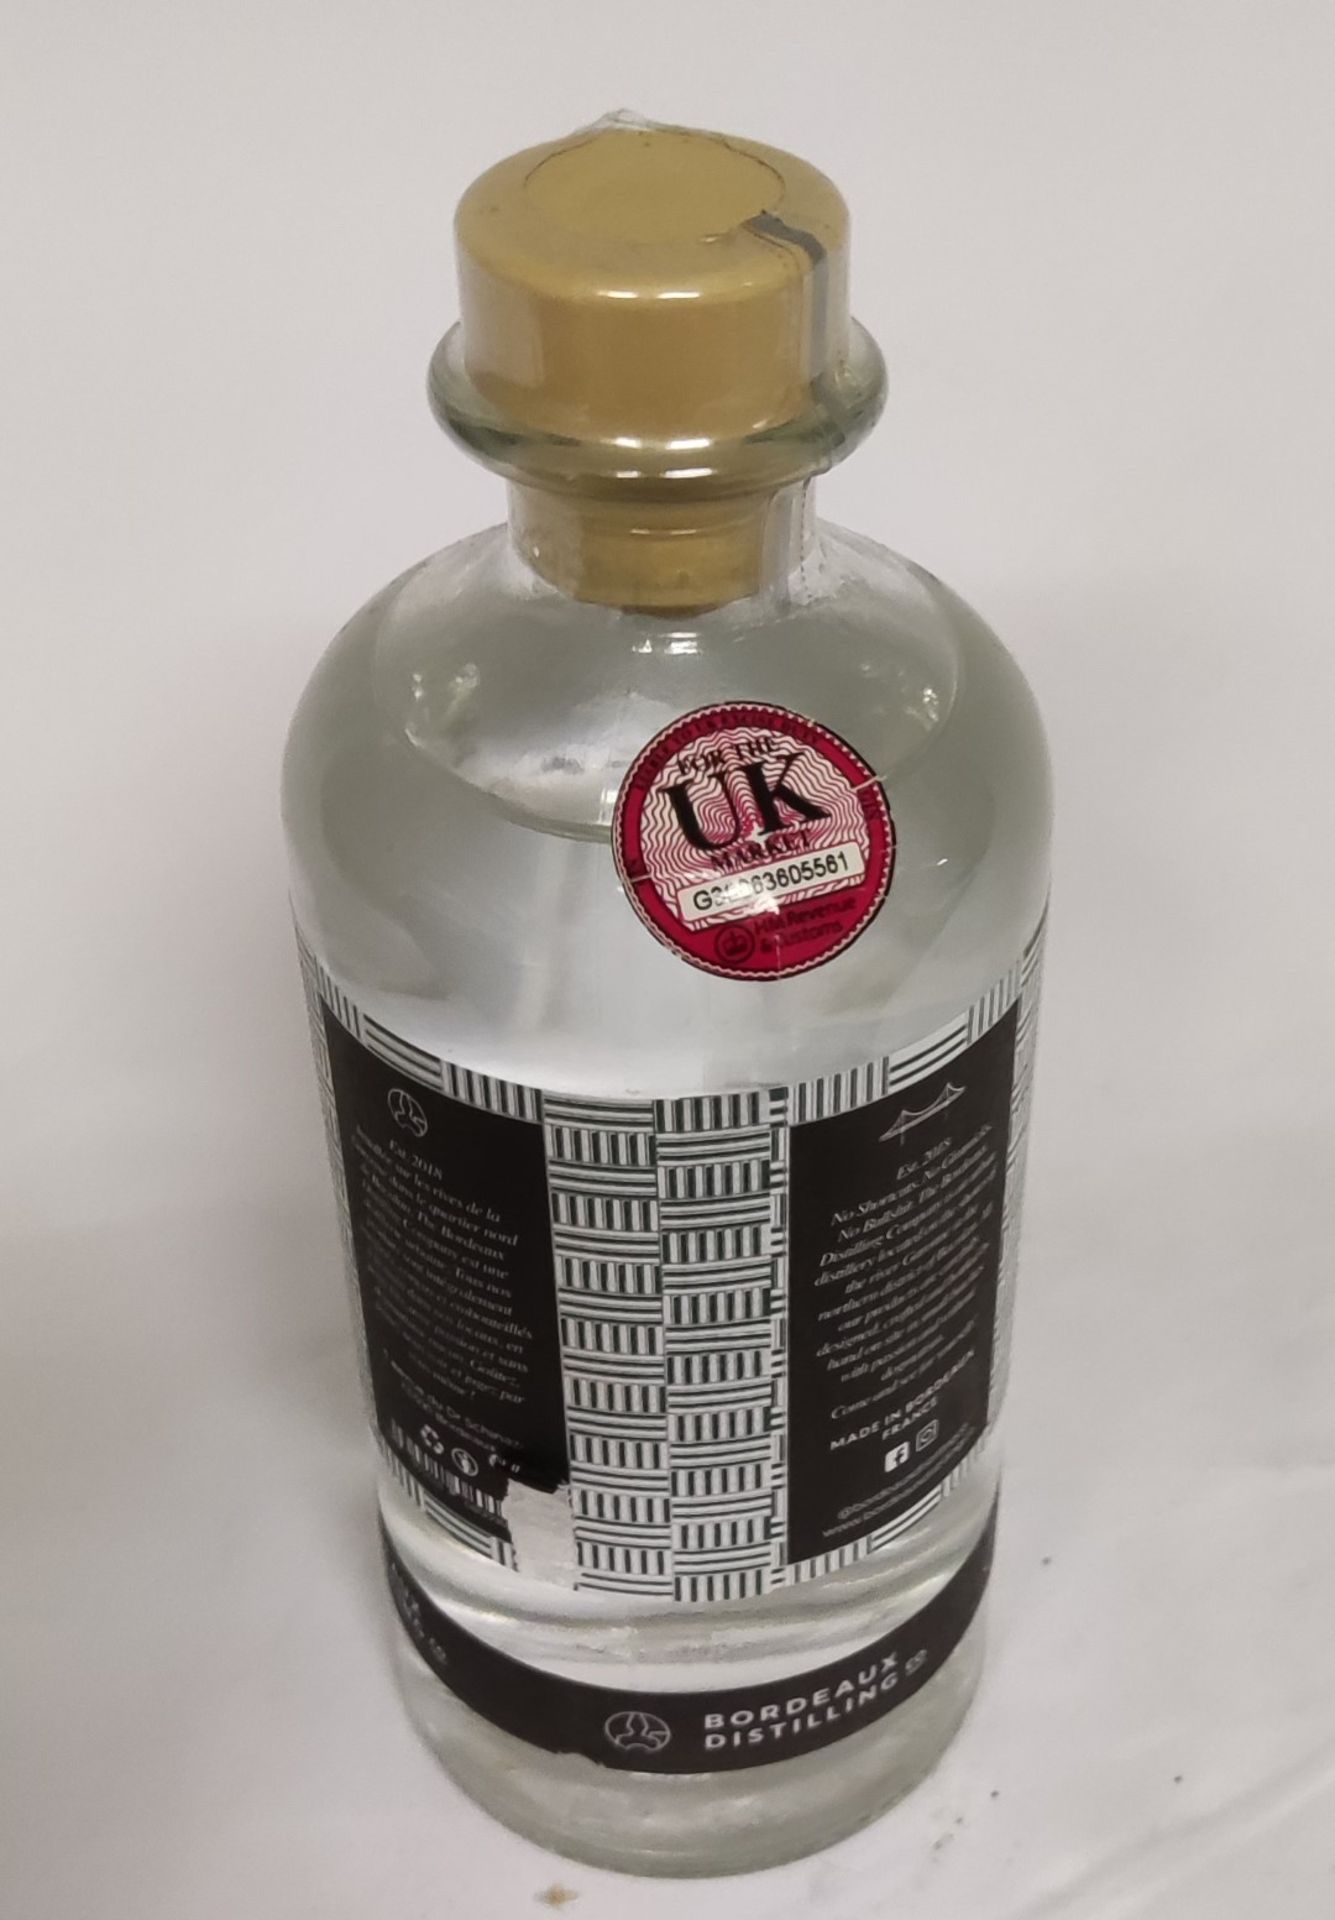 1 x Bottle of Bordeaux Distilling Co. Rivington Dry Gin 50cl - RRP £30 - Image 3 of 5